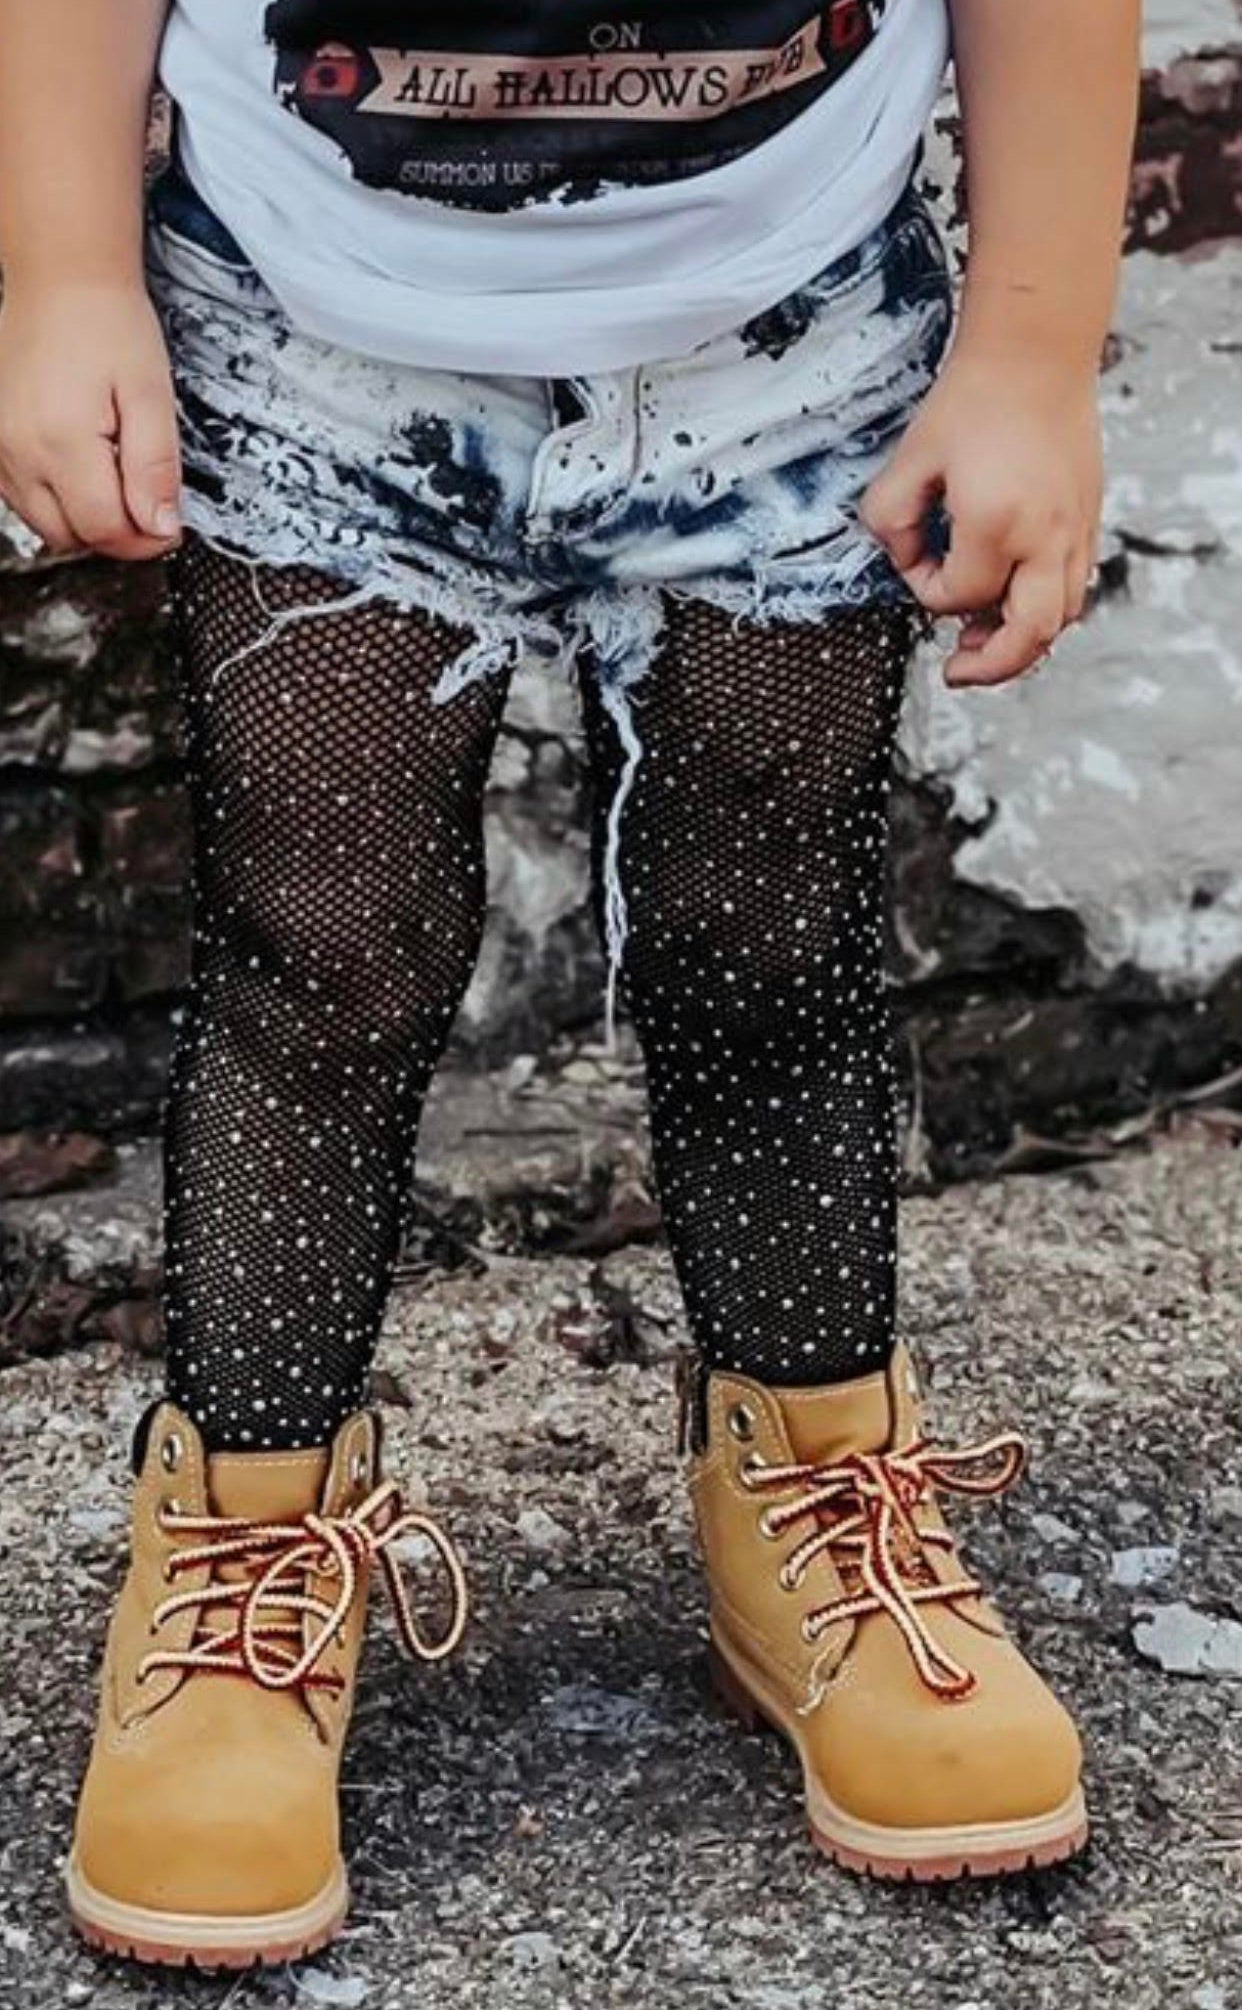 Little Girls Sparkle Fishnet Tights Rhinestone Tights Toddler Tights  Glitter Leggings Kids Stockings 